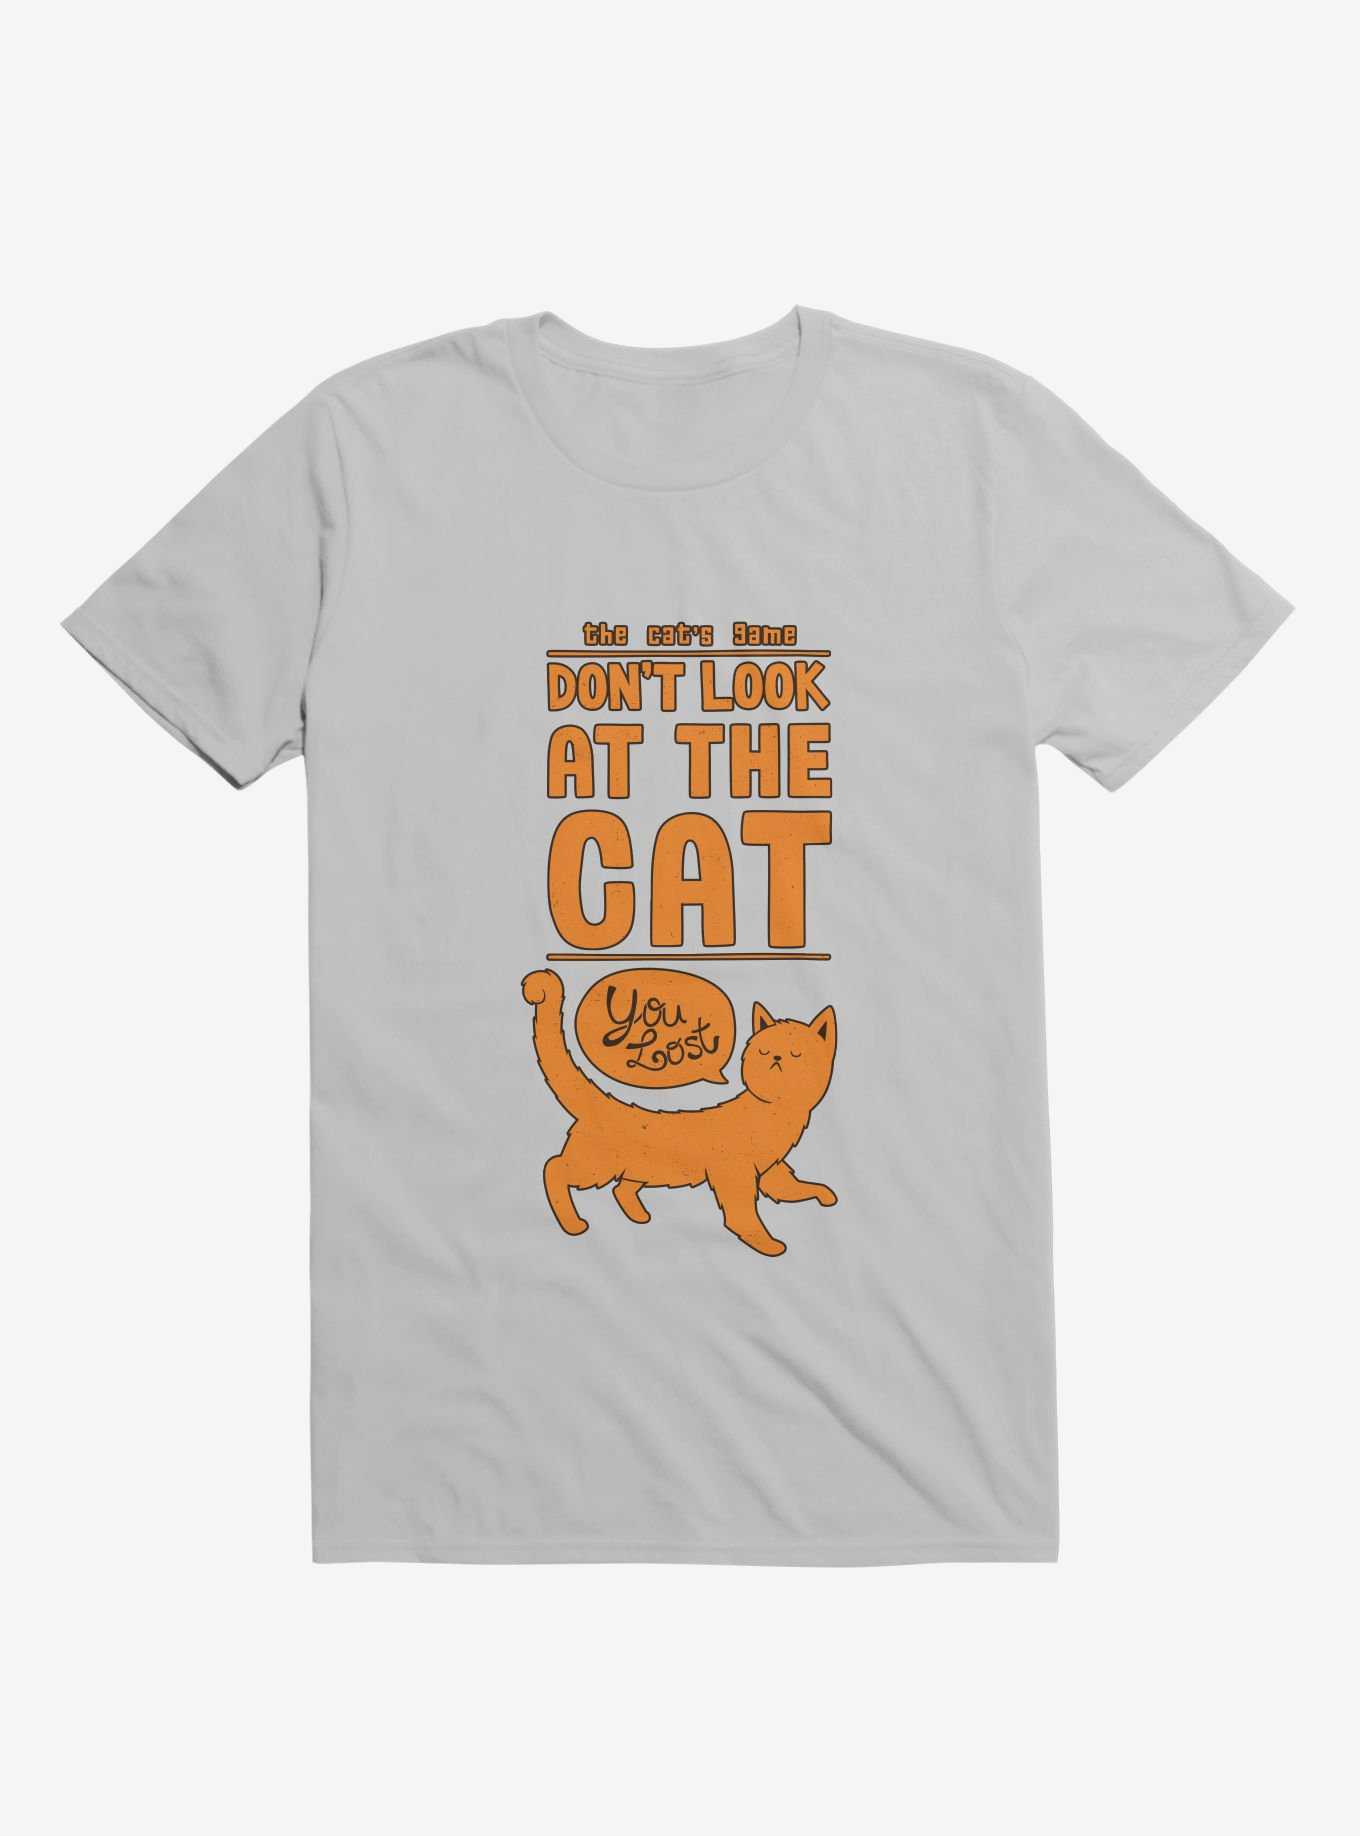 The Cat's Game T-Shirt, , hi-res